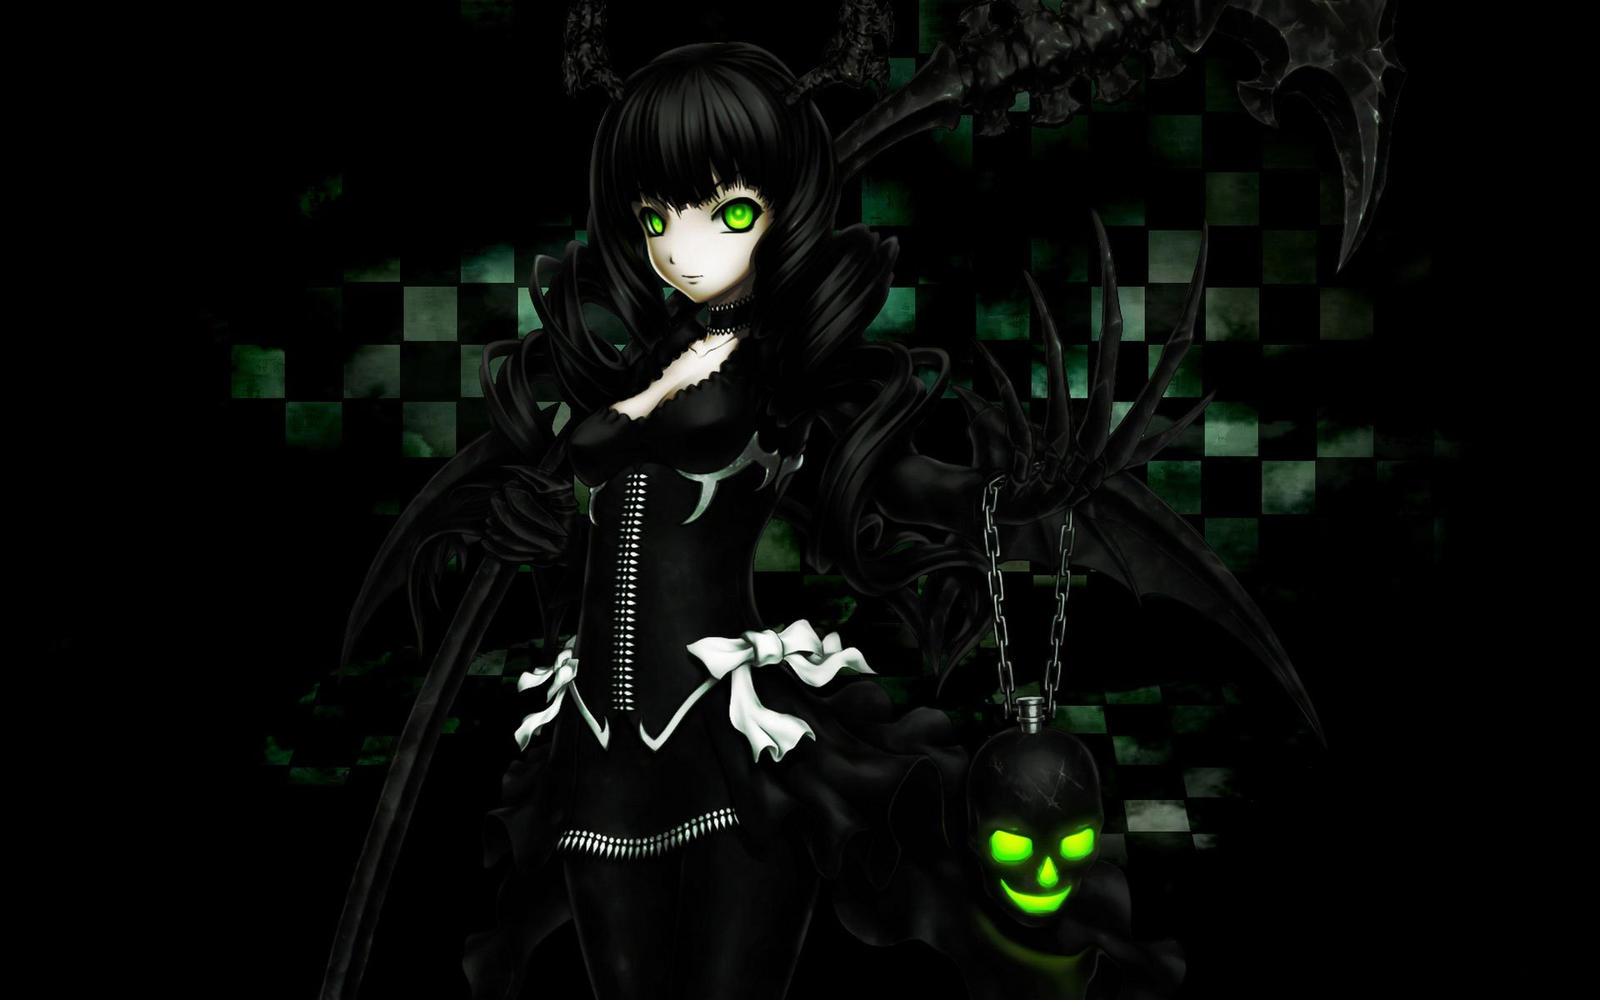 Dark anime girl wallpaper by Jerry14NarDxoo - Download on ZEDGE™